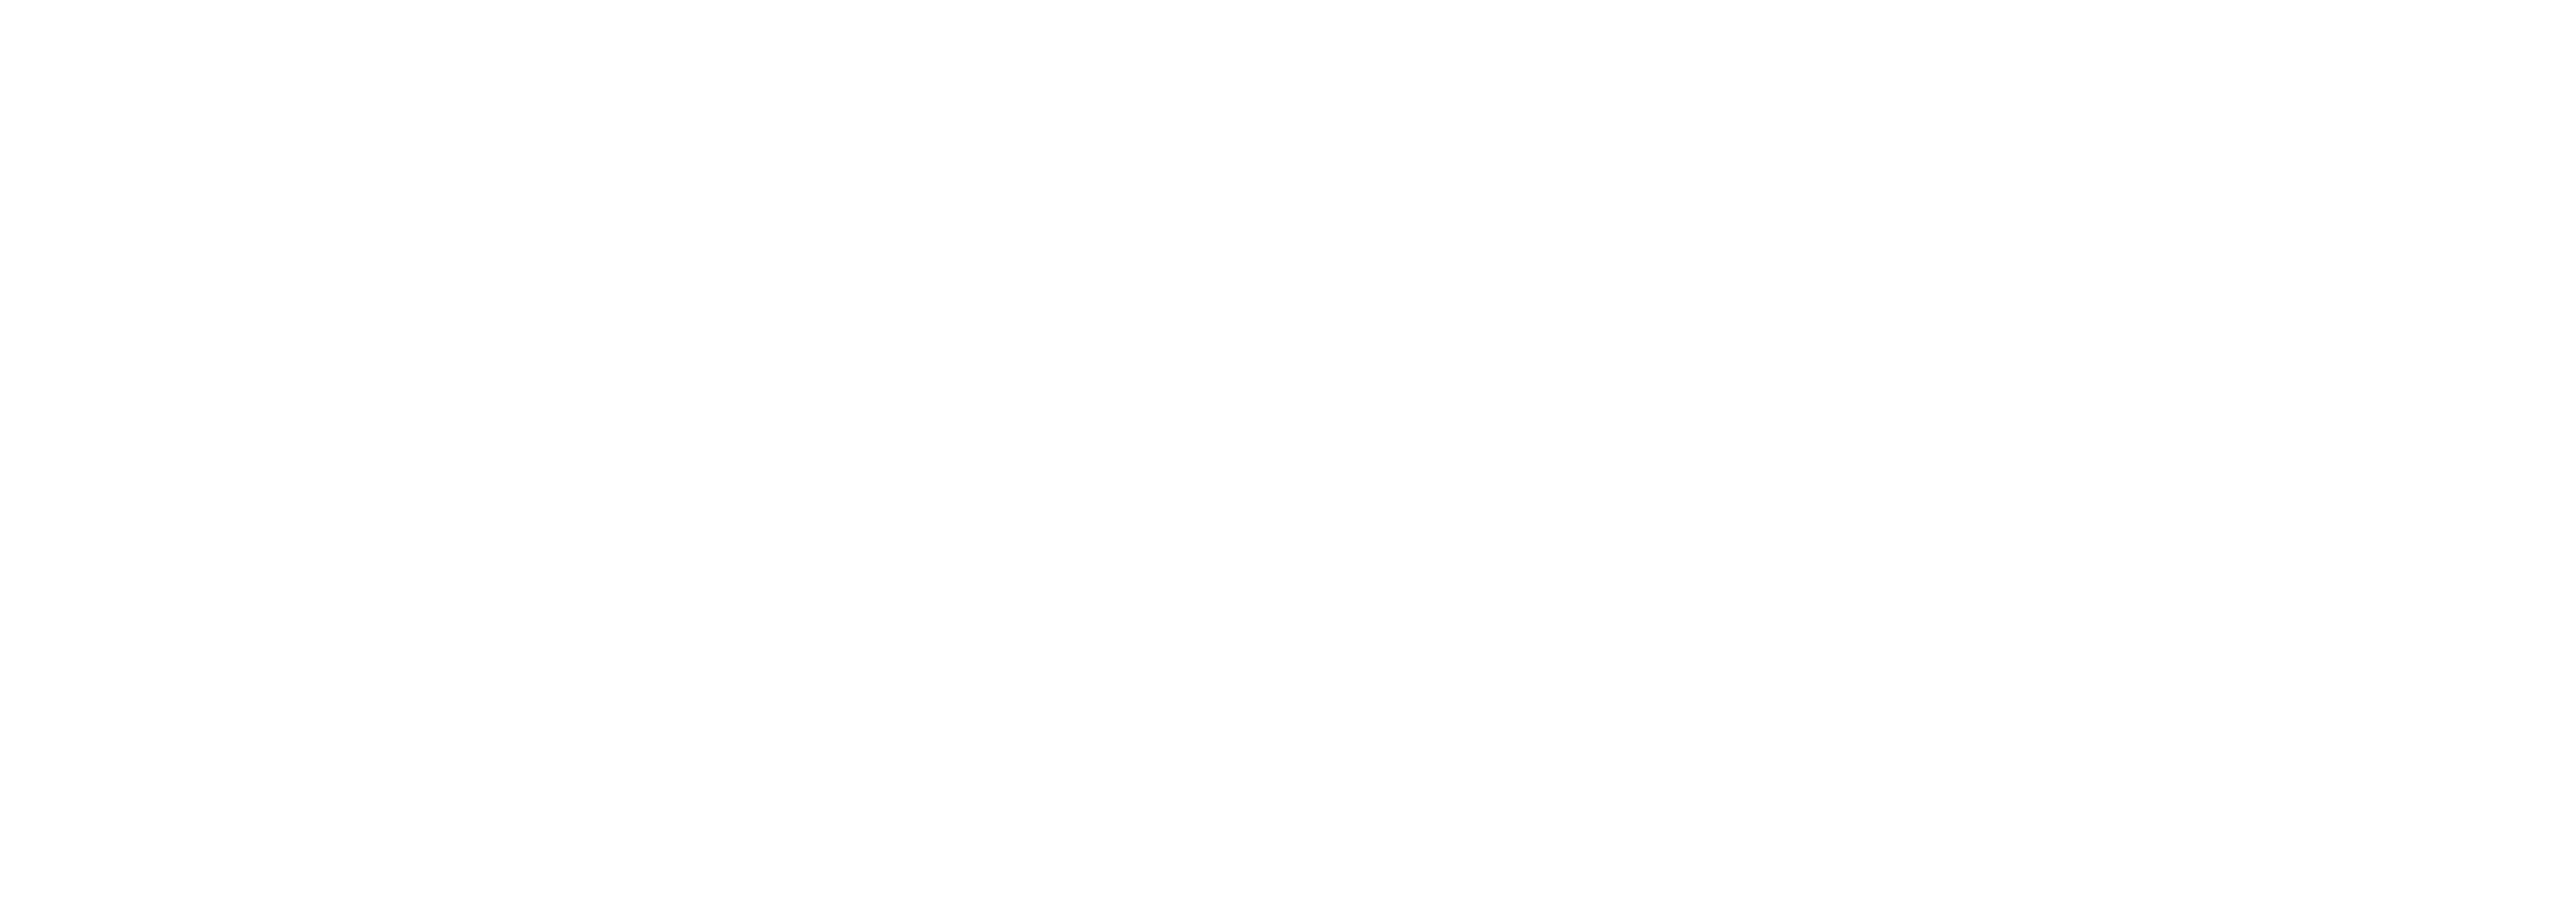 Girls' U19 World Championship 2023